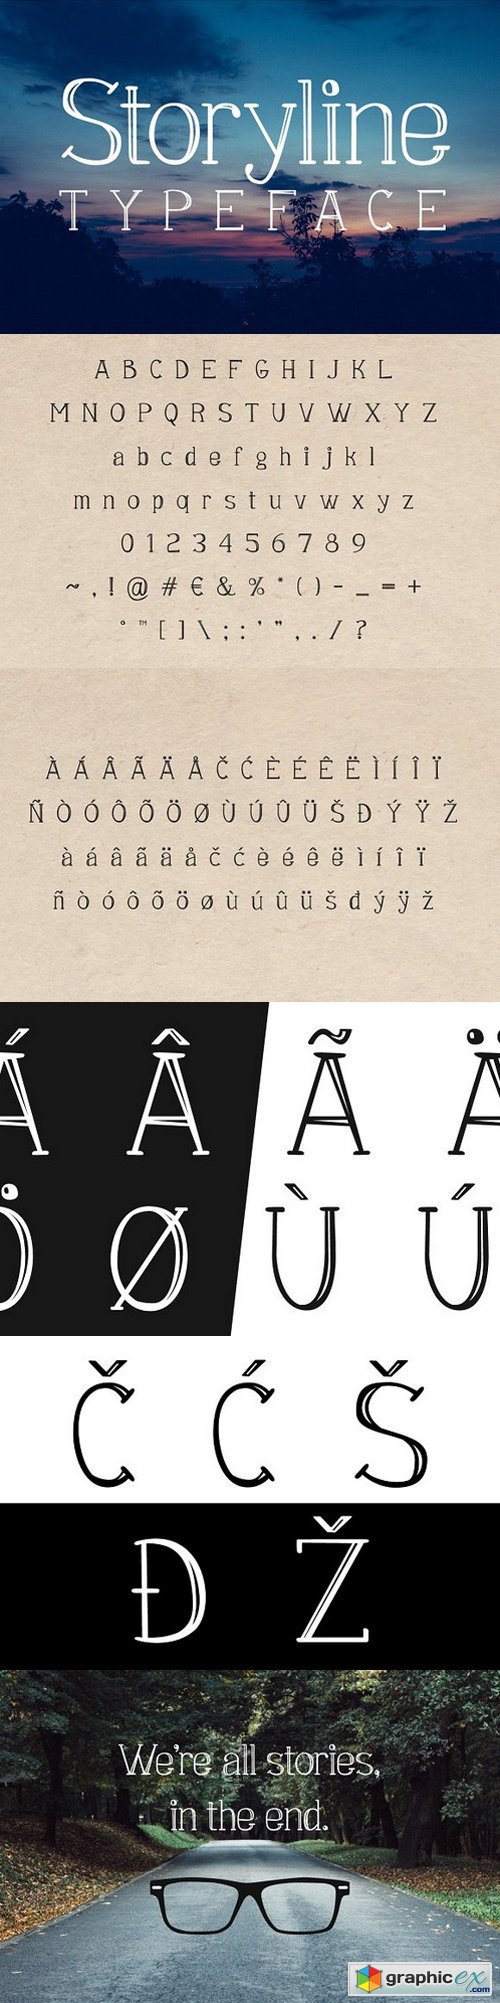 Storyline typeface